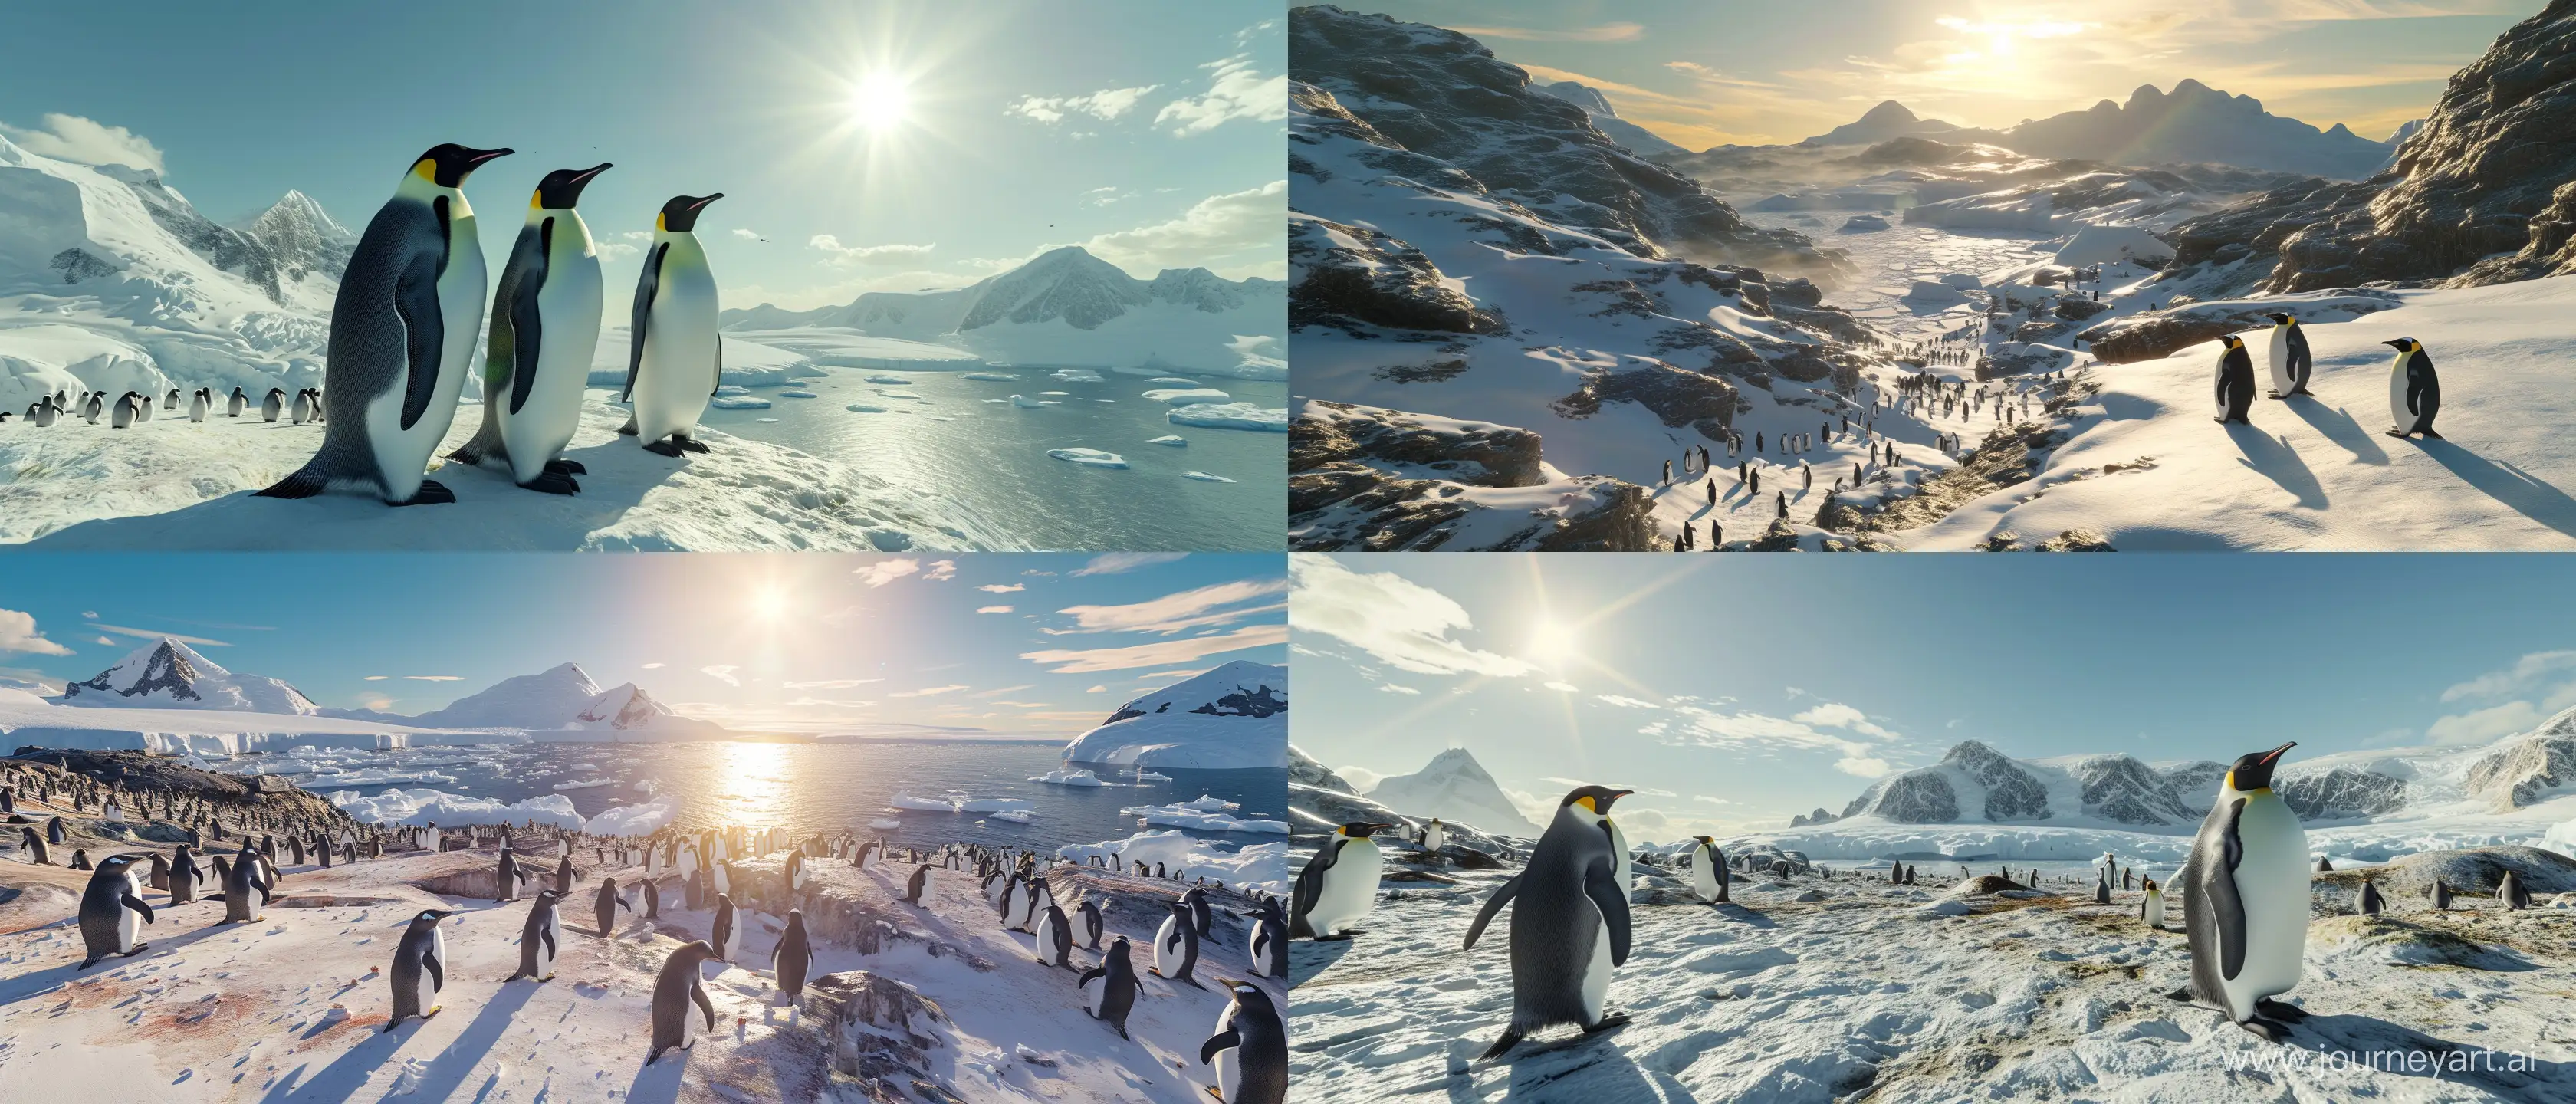 Breathtaking-Aerial-View-of-HyperRealistic-Penguin-Landscape-in-Antarctica